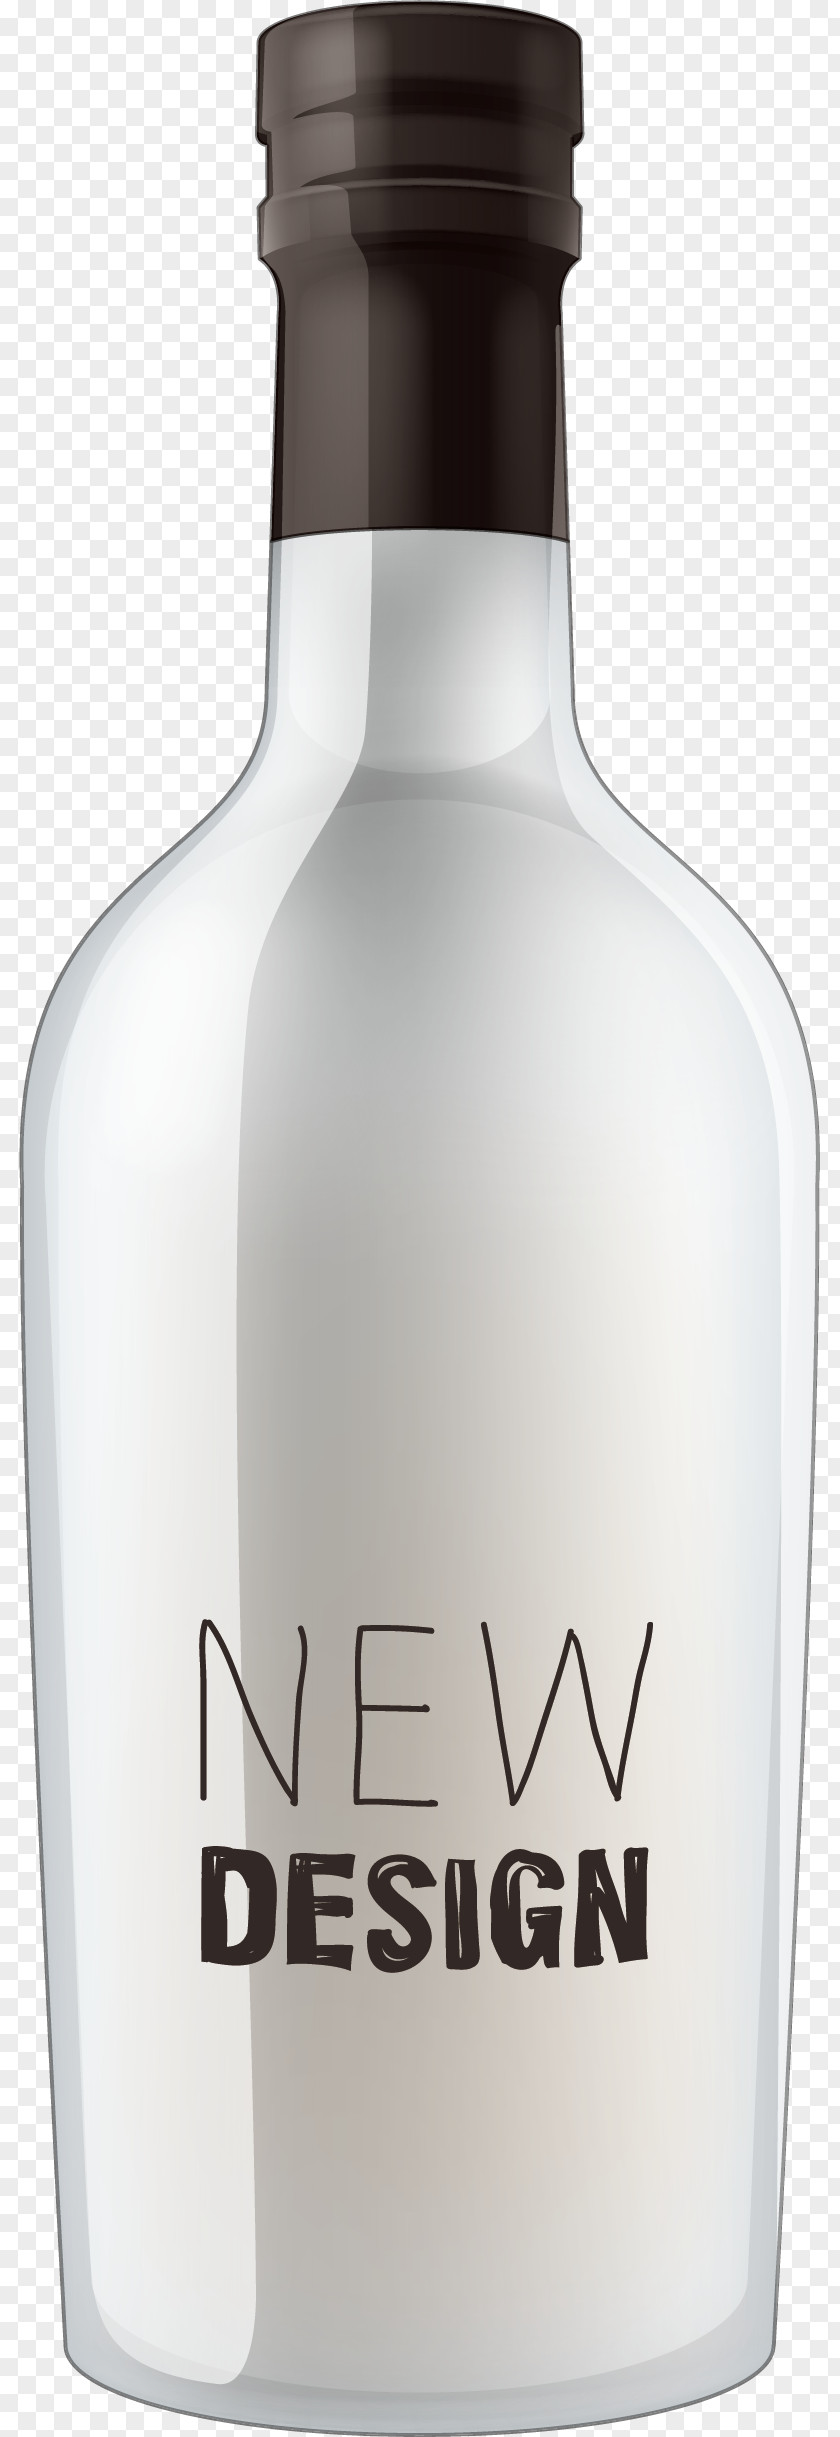 Transparent Bottle Decorative Pattern Graphic Design PNG